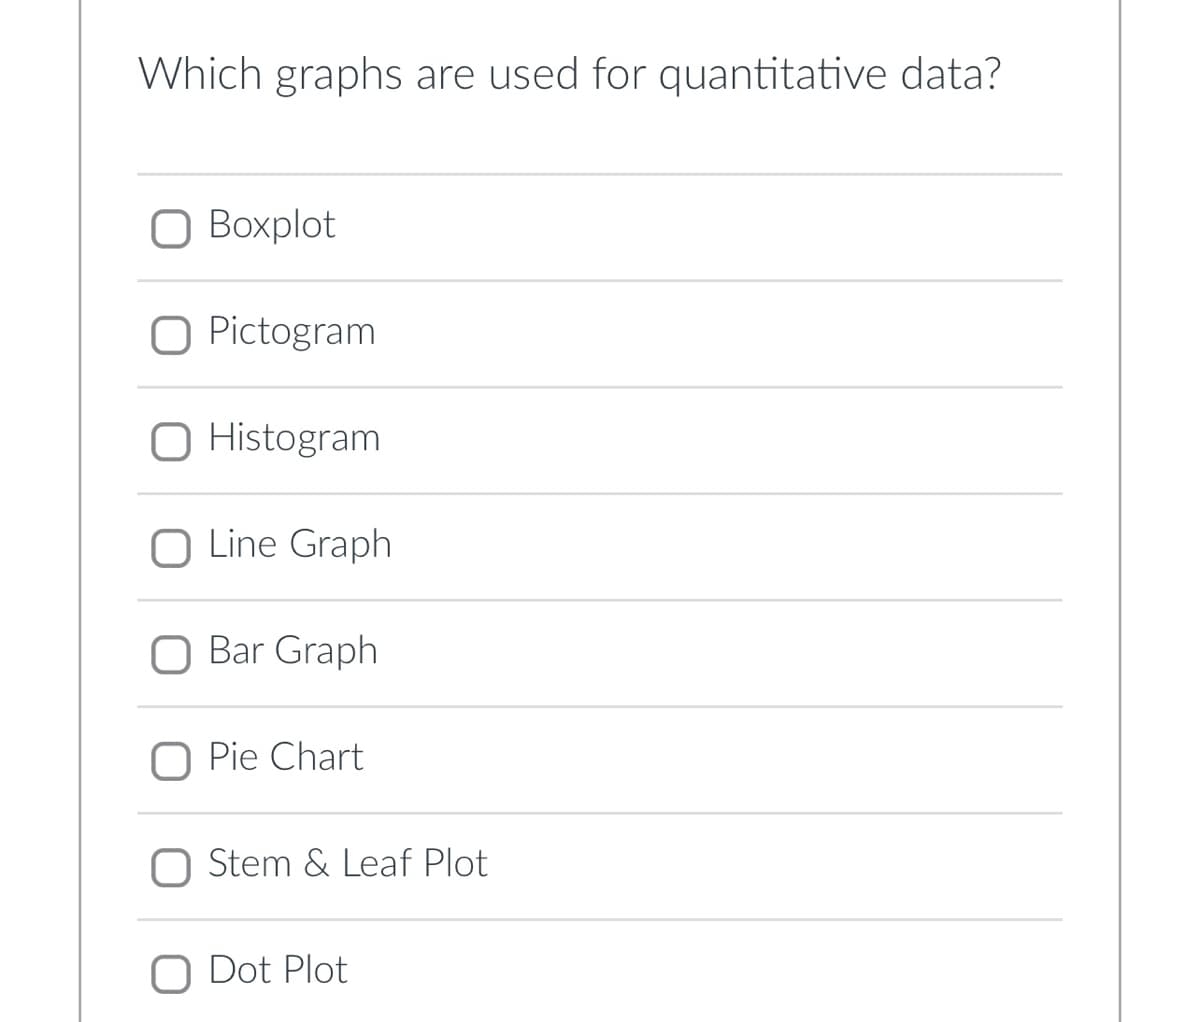 Which graphs are used for quantitative data?
O Boxplot
O Pictogram
O Histogram
Line Graph
O Bar Graph
Pie Chart
Stem & Leaf Plot
Dot Plot